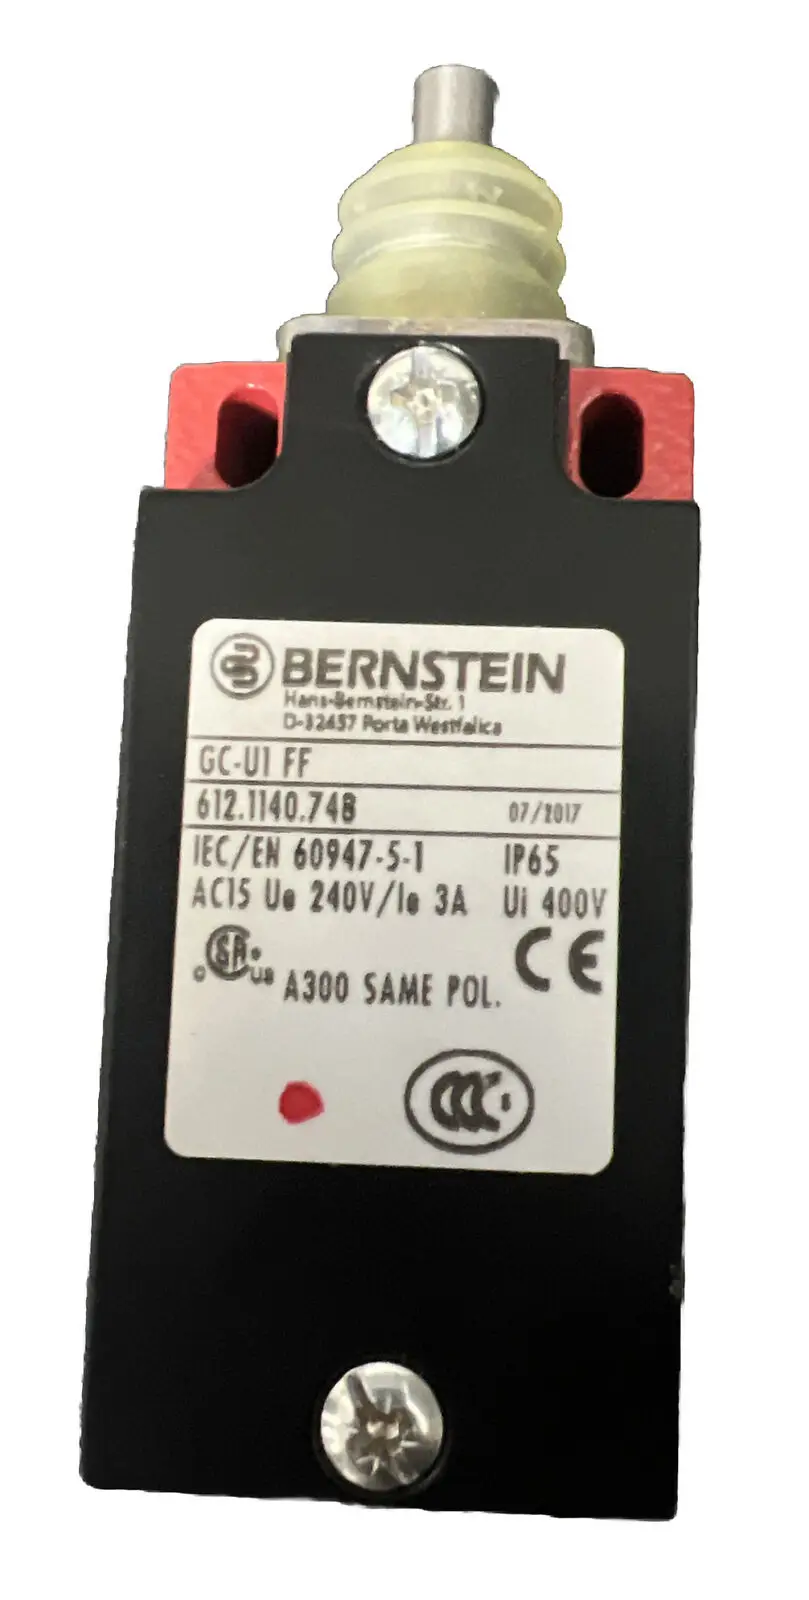 

Bernstein limit switch GC-U1 FF item number 612.1140.748 10A/500VAC brand new original